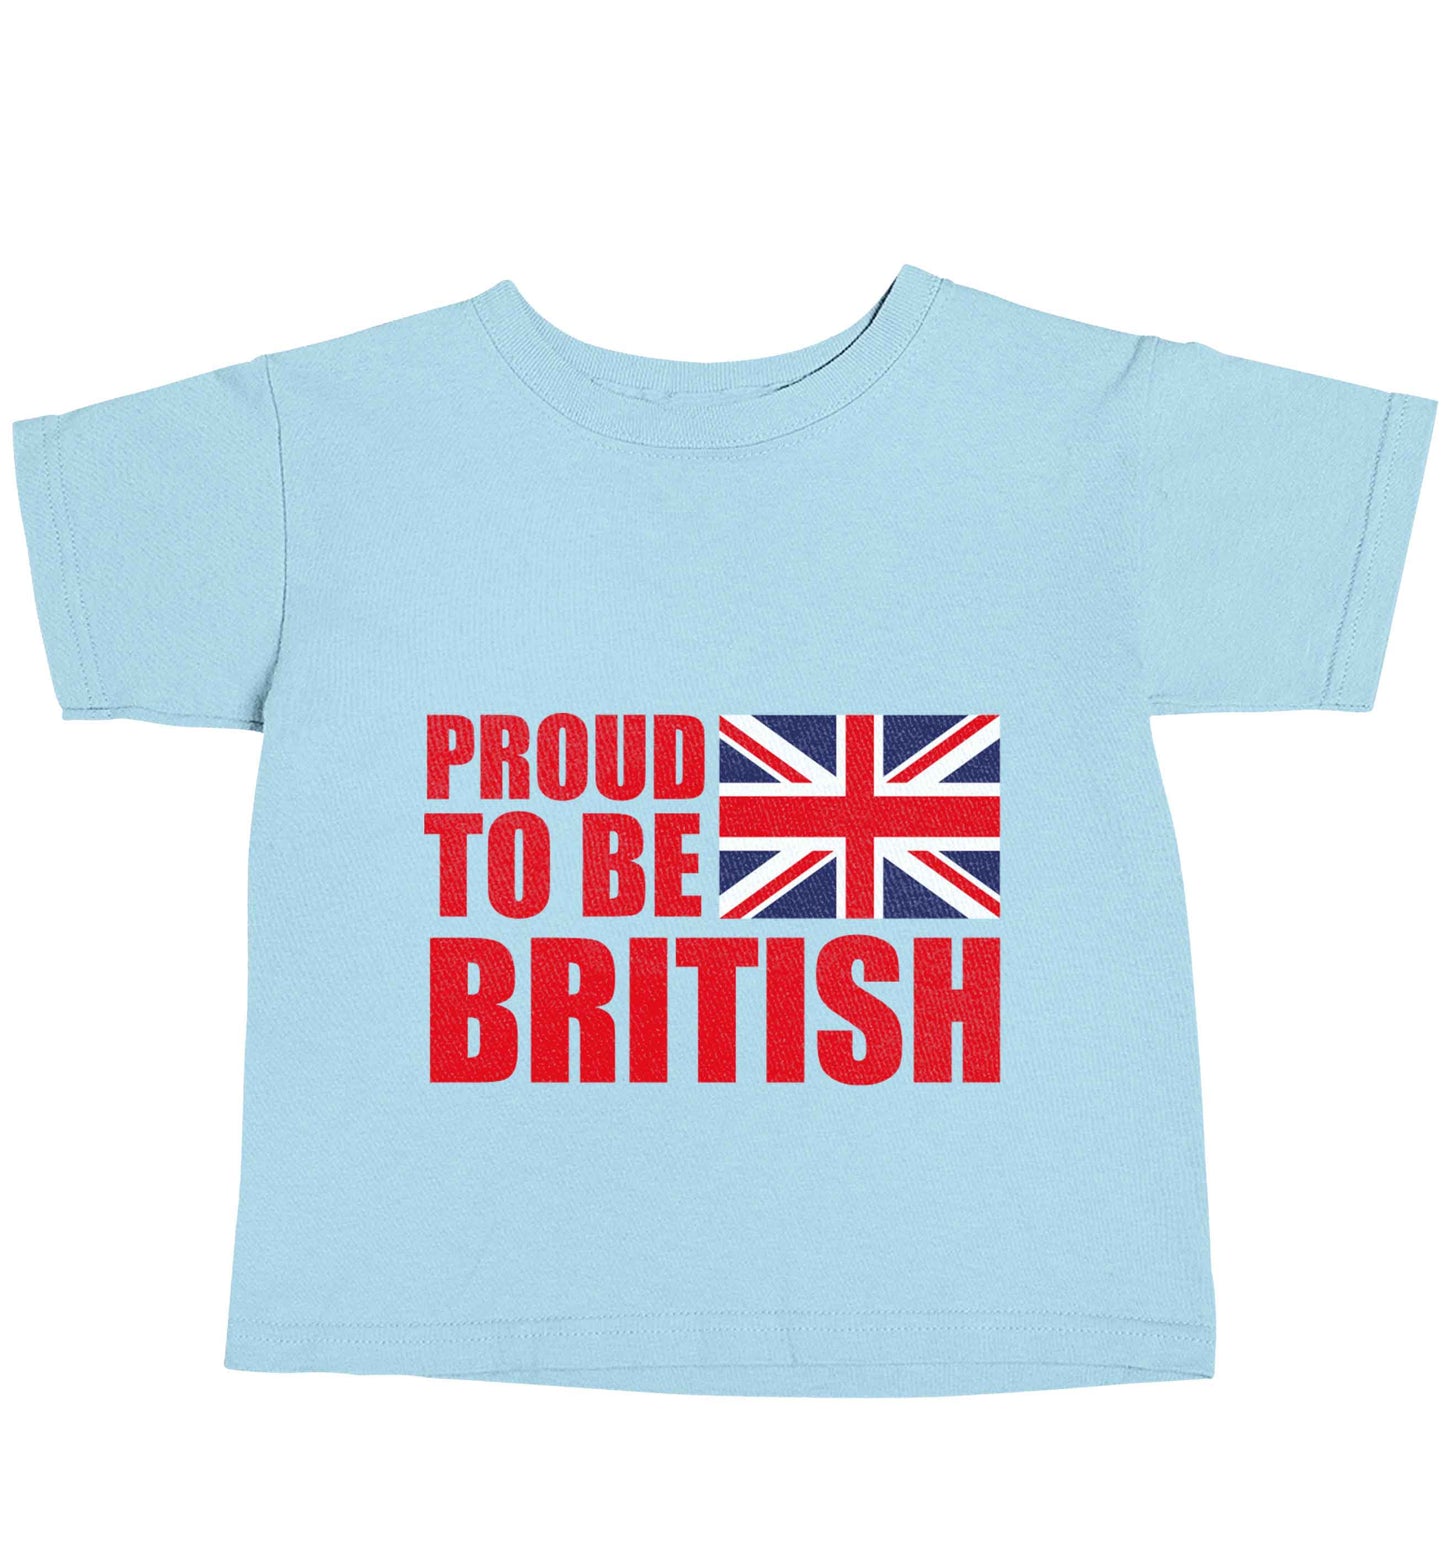 Proud to be British light blue baby toddler Tshirt 2 Years